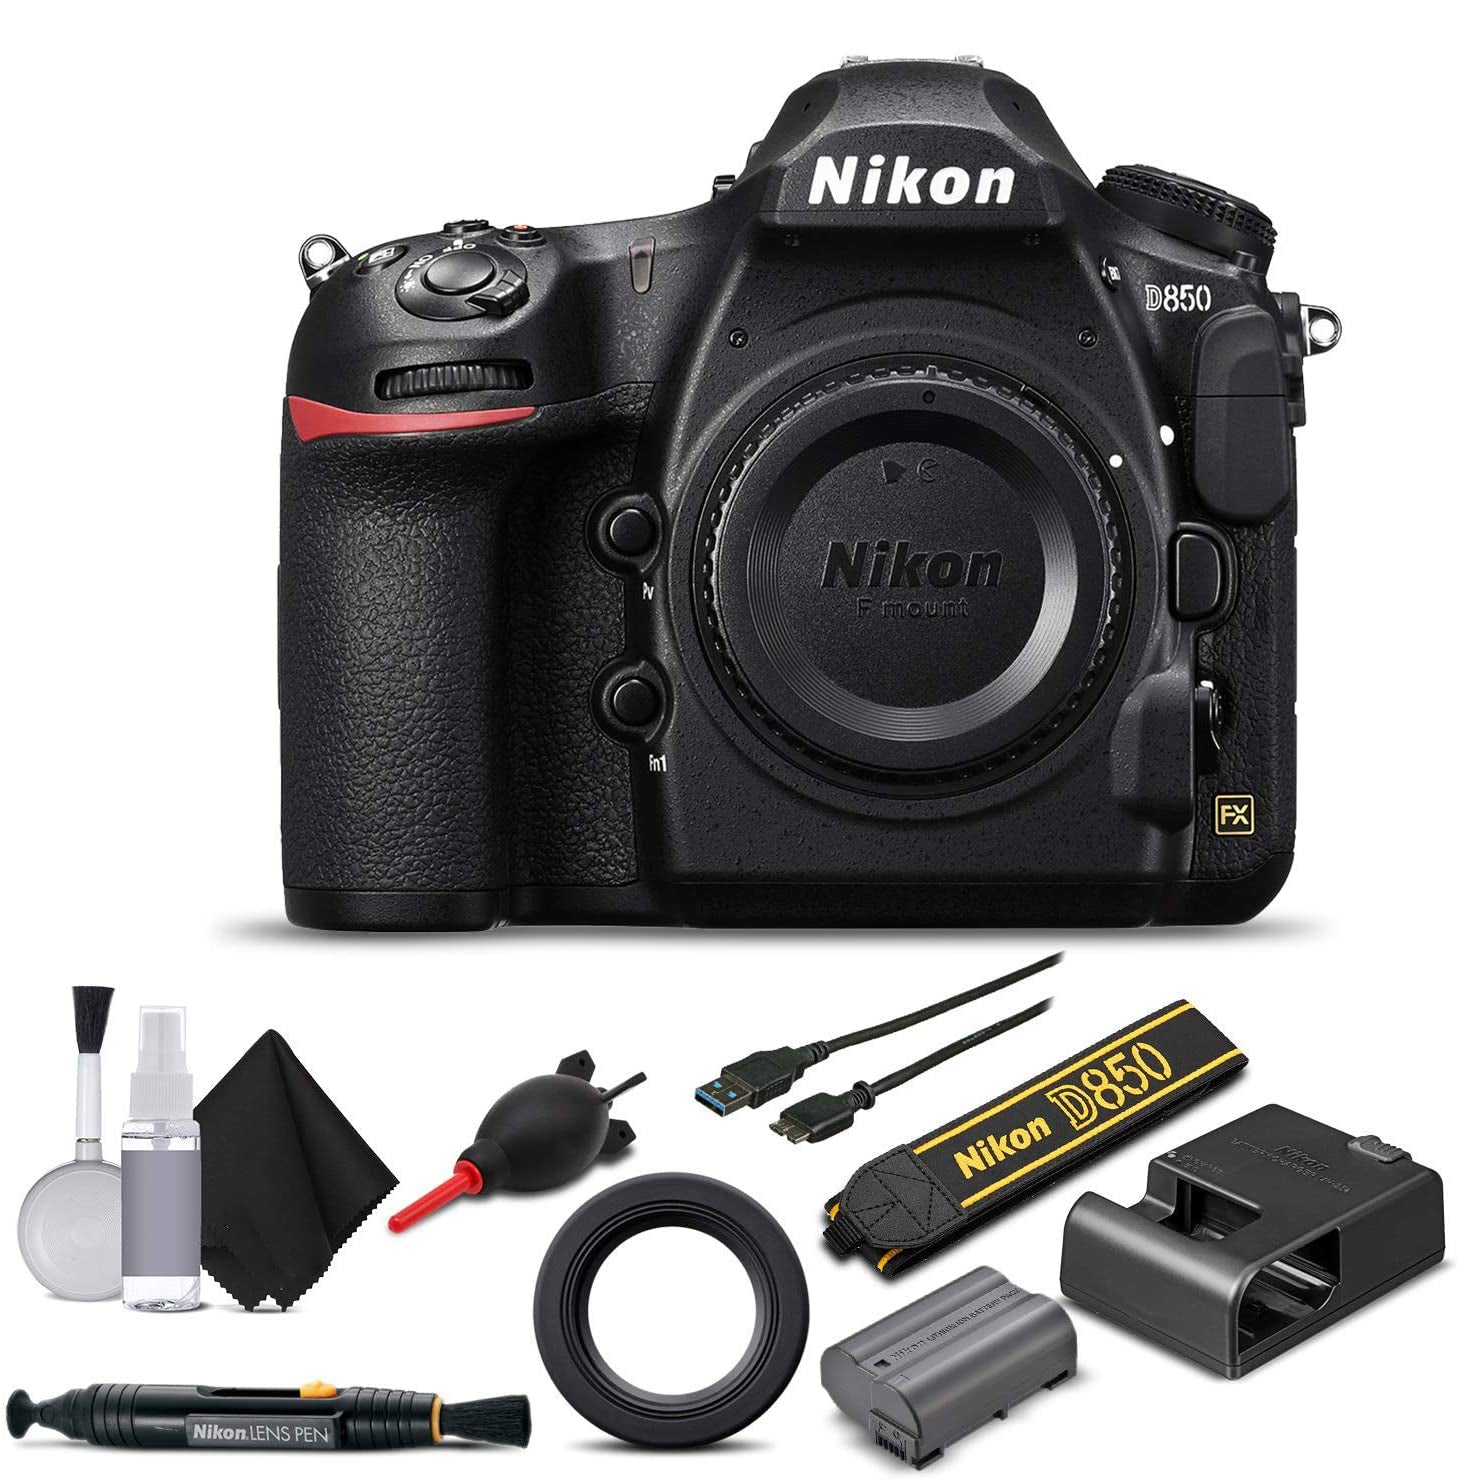 Nikon D850 Digital SLR Camera Body Only Starter Set With Extended Warranty (Intl Model)